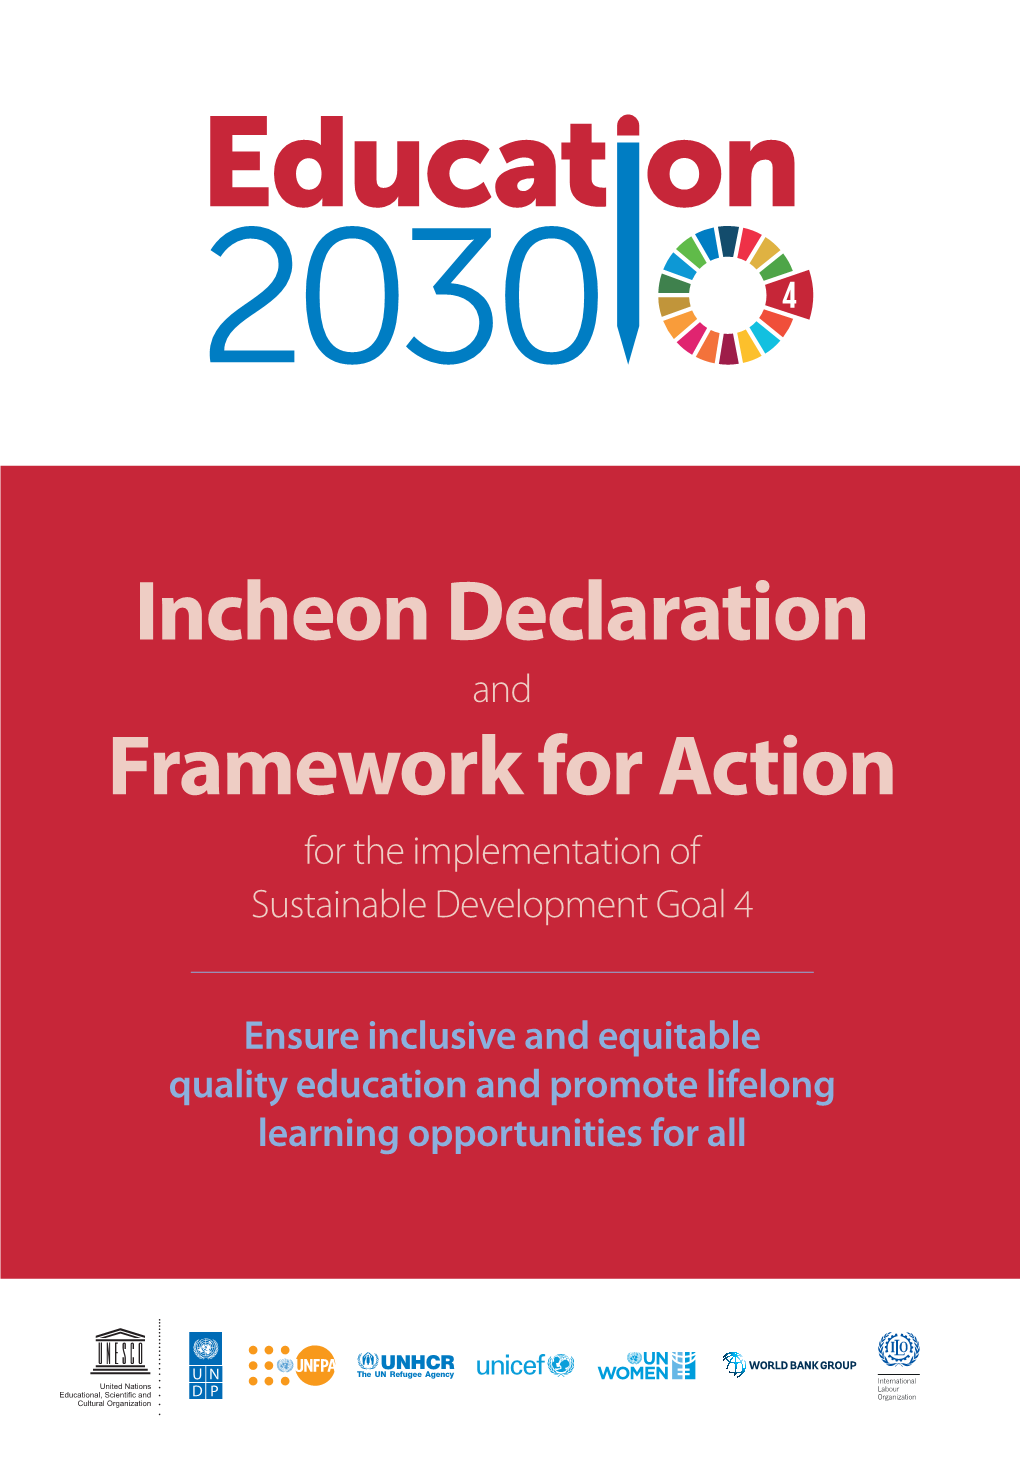 Education 2030 Framework for Action